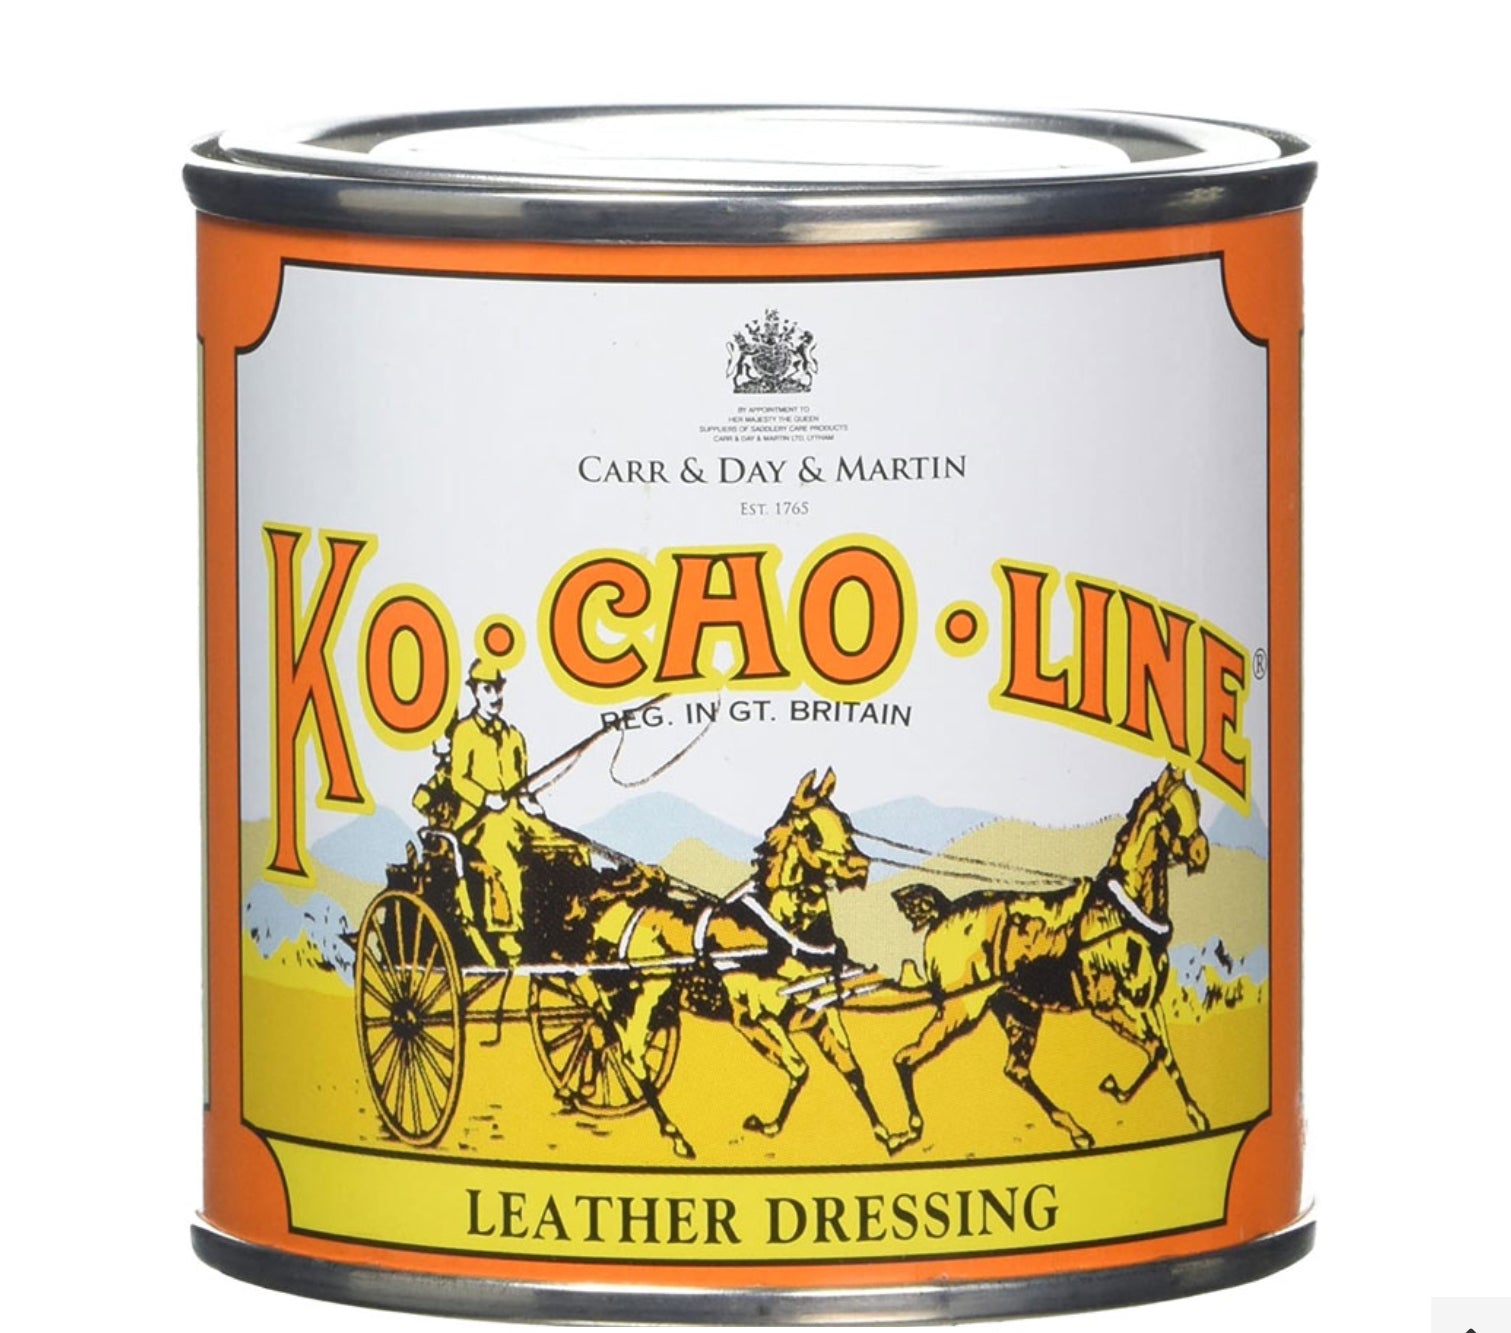 Carr & Day & Martin Ko-Cao-Line Leather Dressing